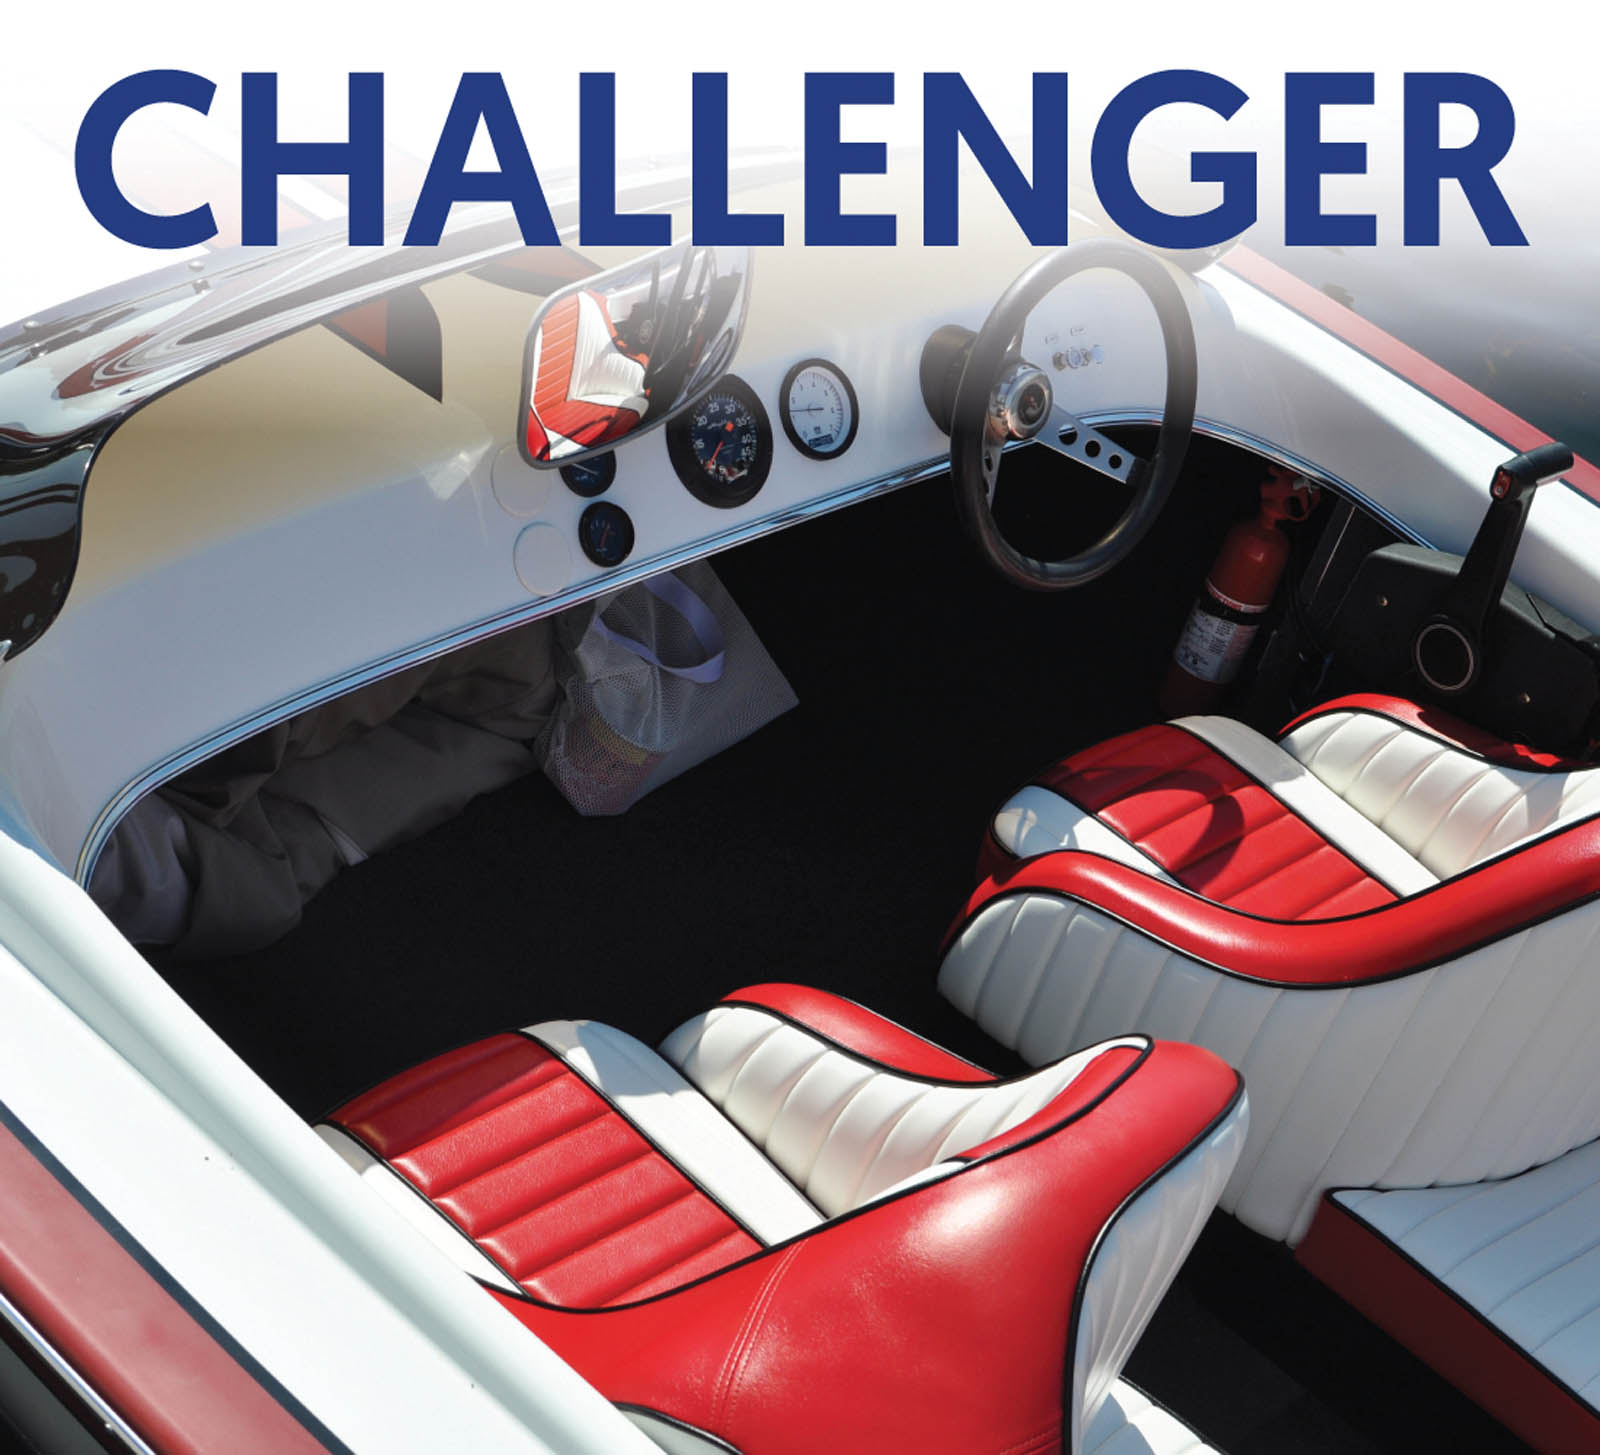 Challenger Image